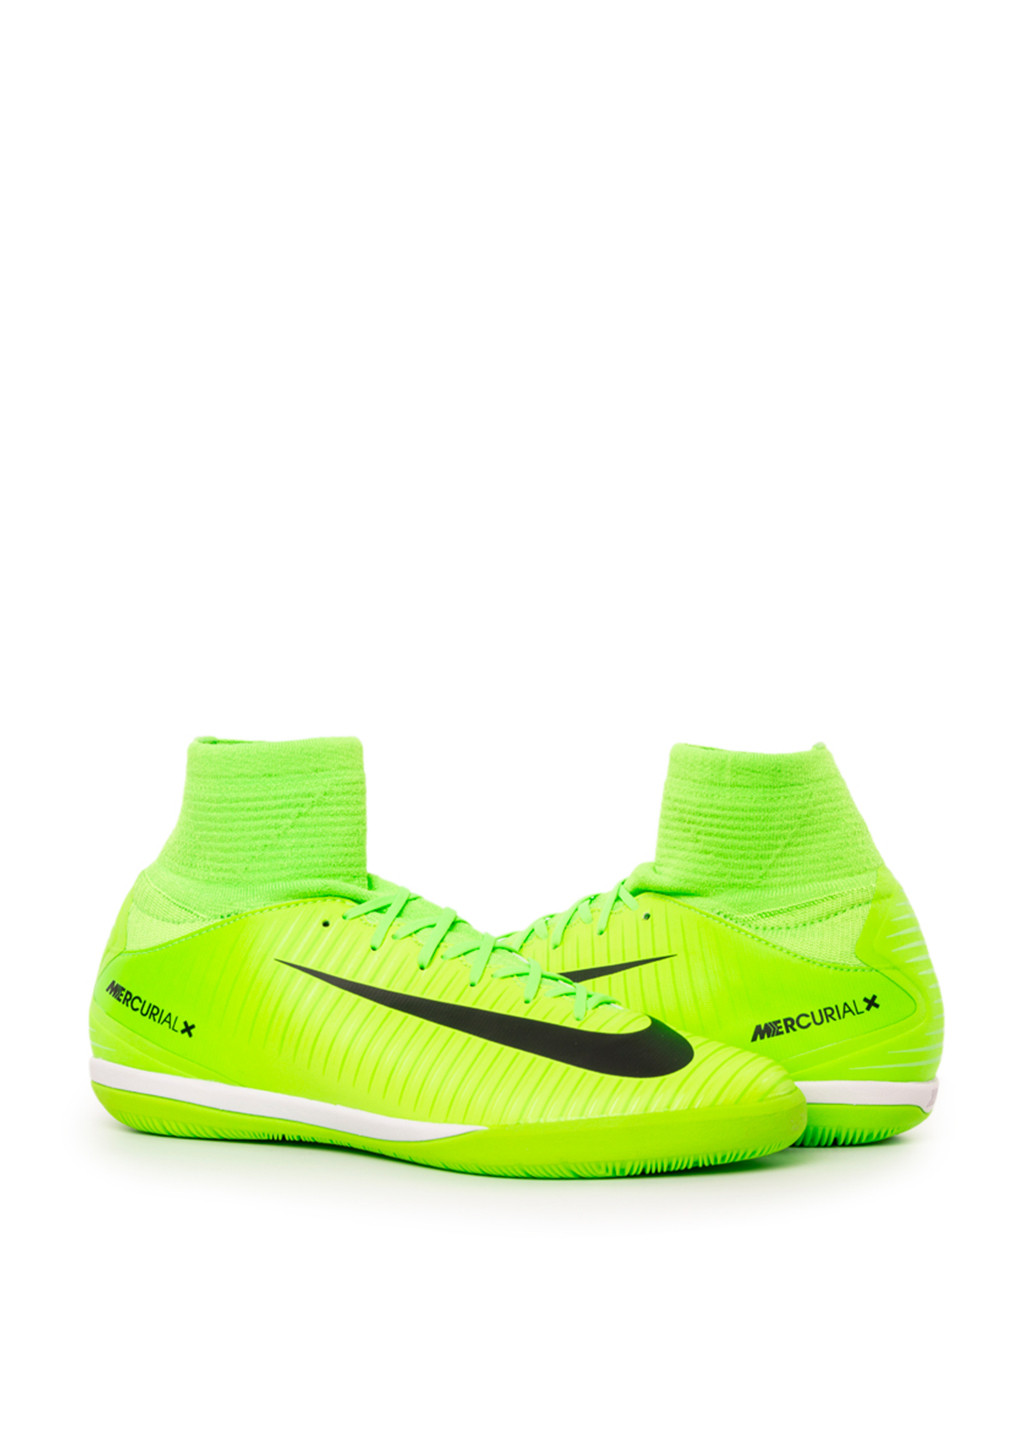 Кислотно-зеленые футзалки Nike